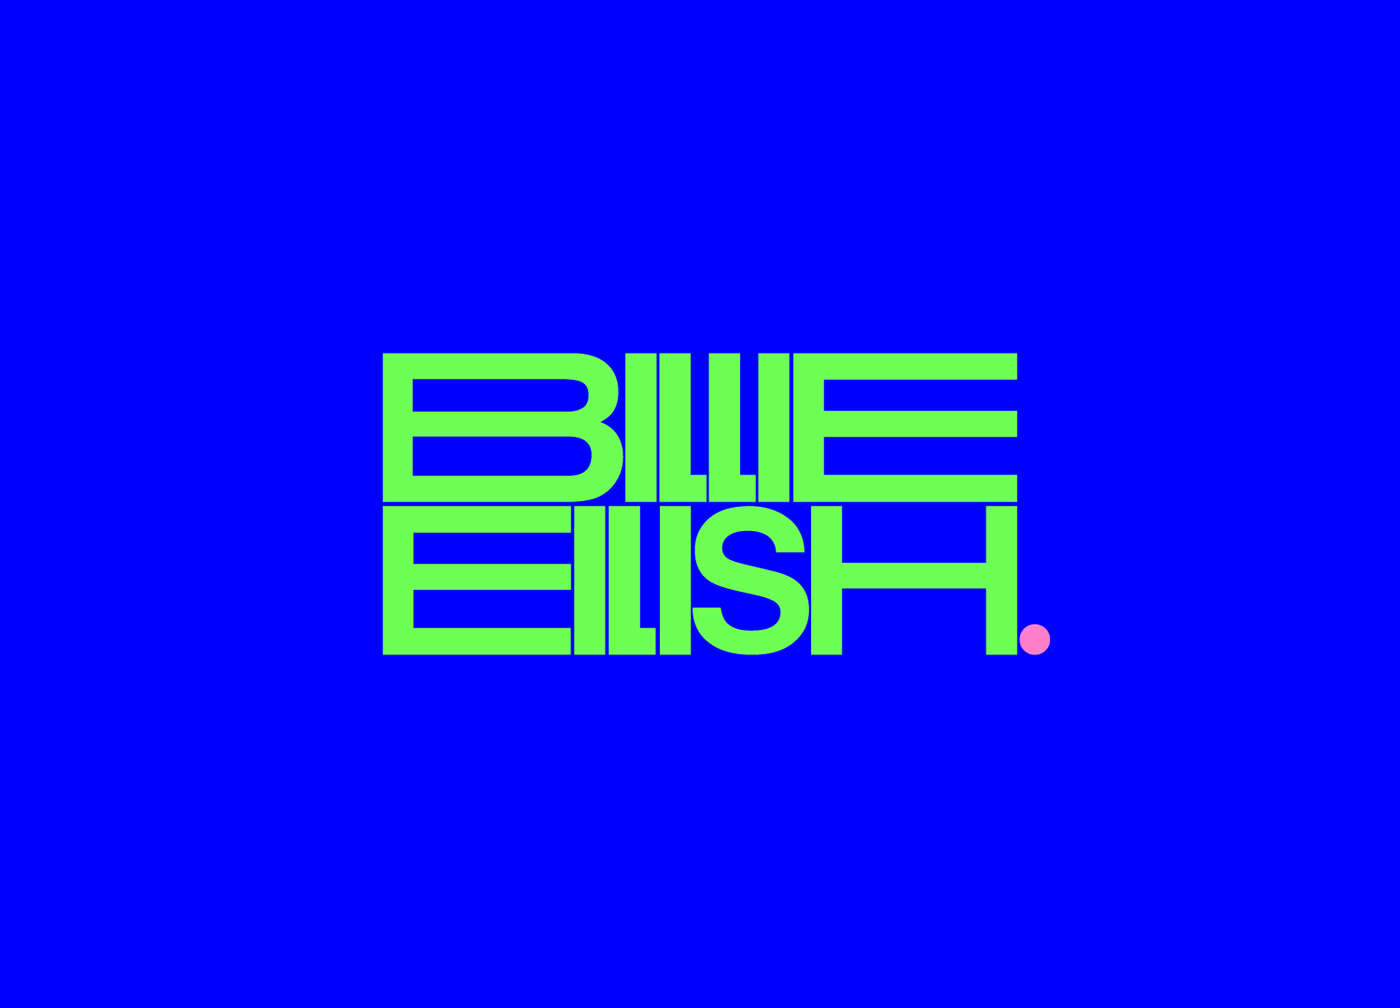 Billie Billie Eilish blue font green lettering Lyrics song Typeface typography  